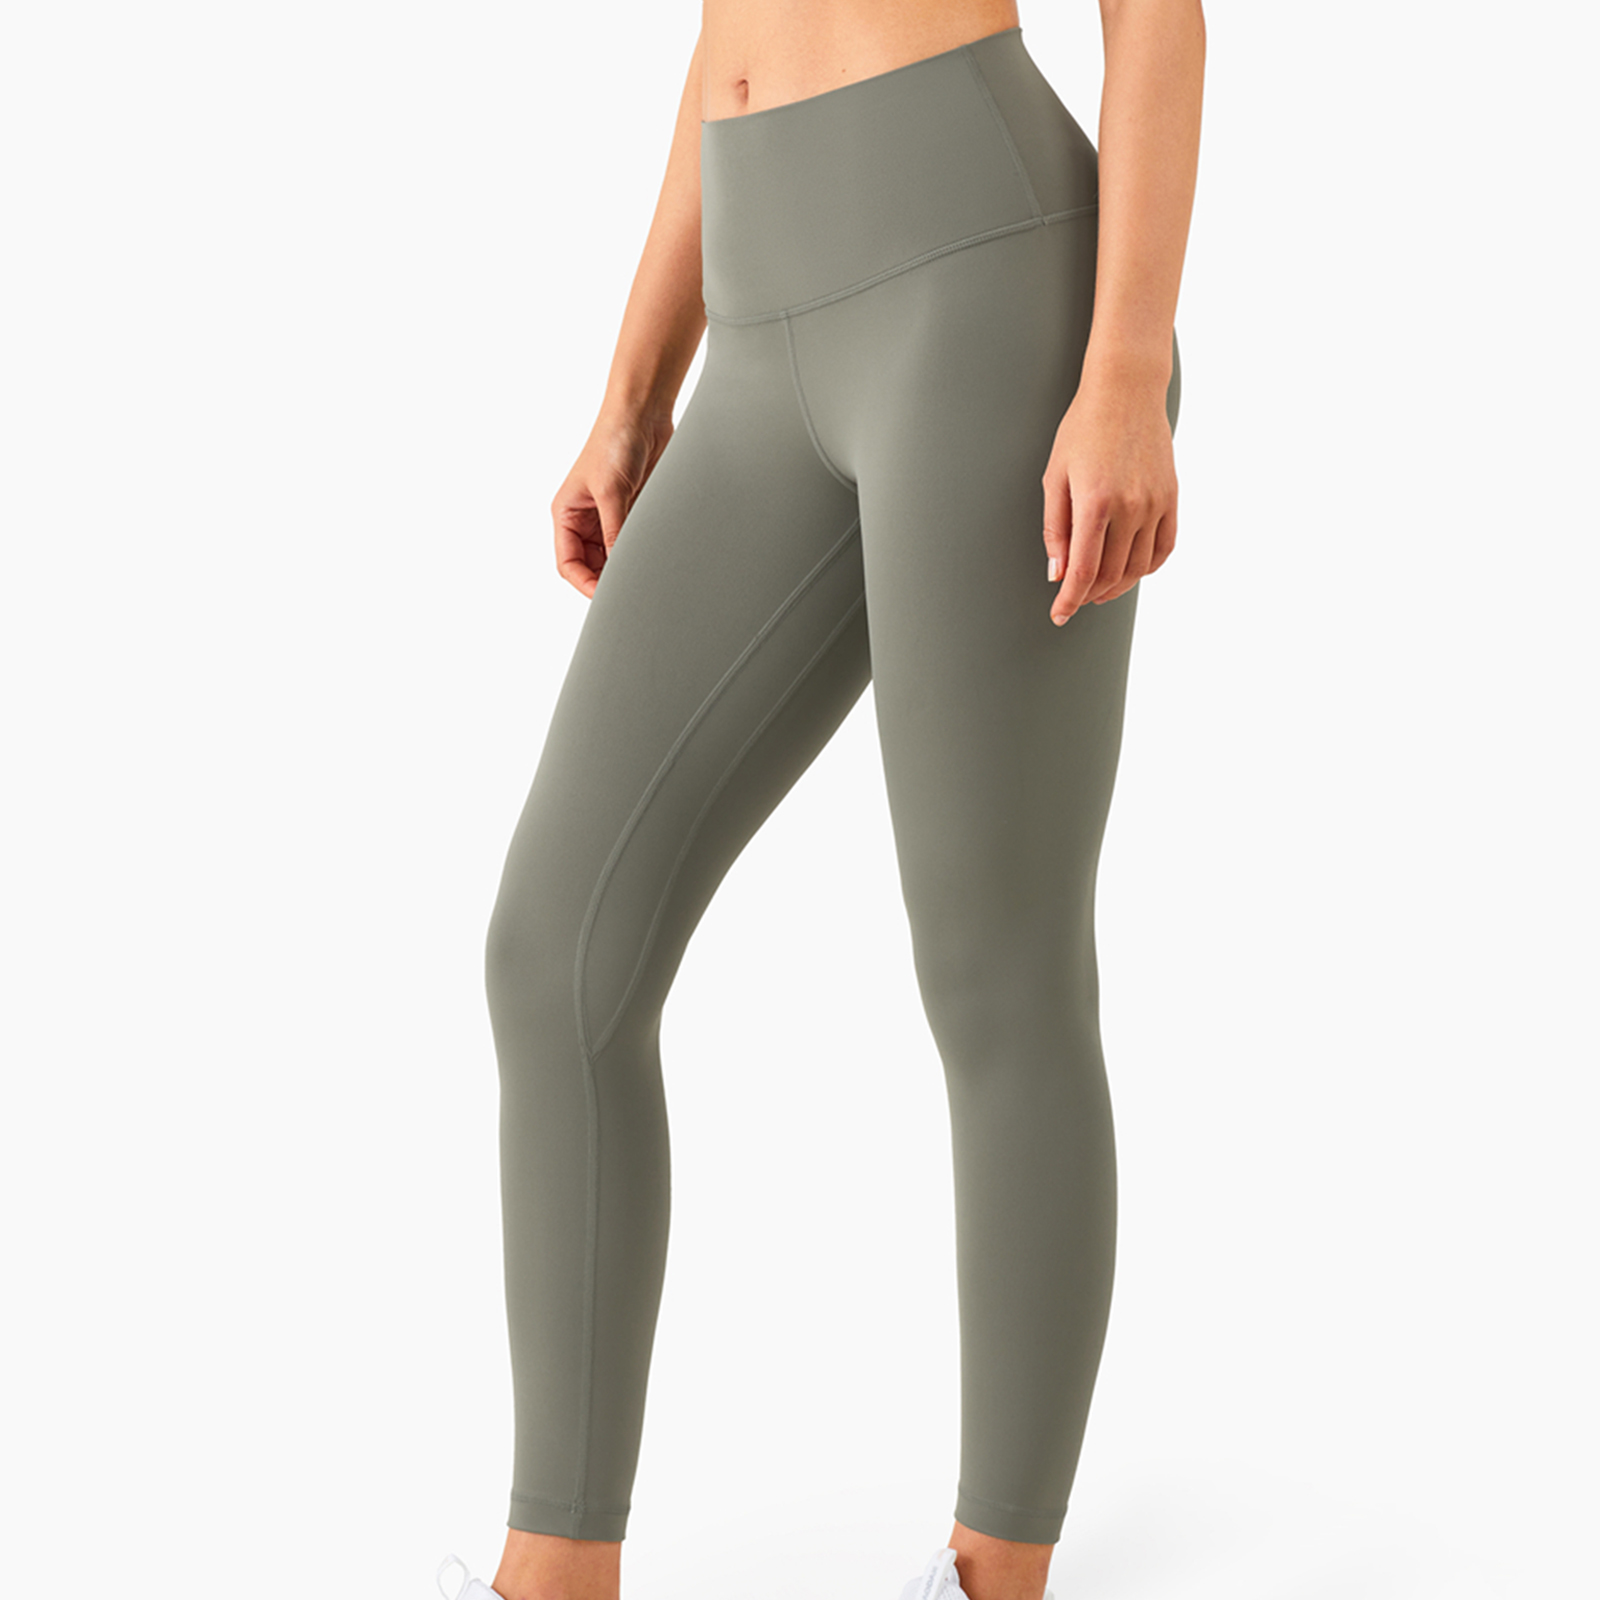 YOGA Women's Naked Feeling Workout Leggings Buttery Soft Tummy Control Gym Yoga Pants 7/8 High Waist Yoga Tight Pants